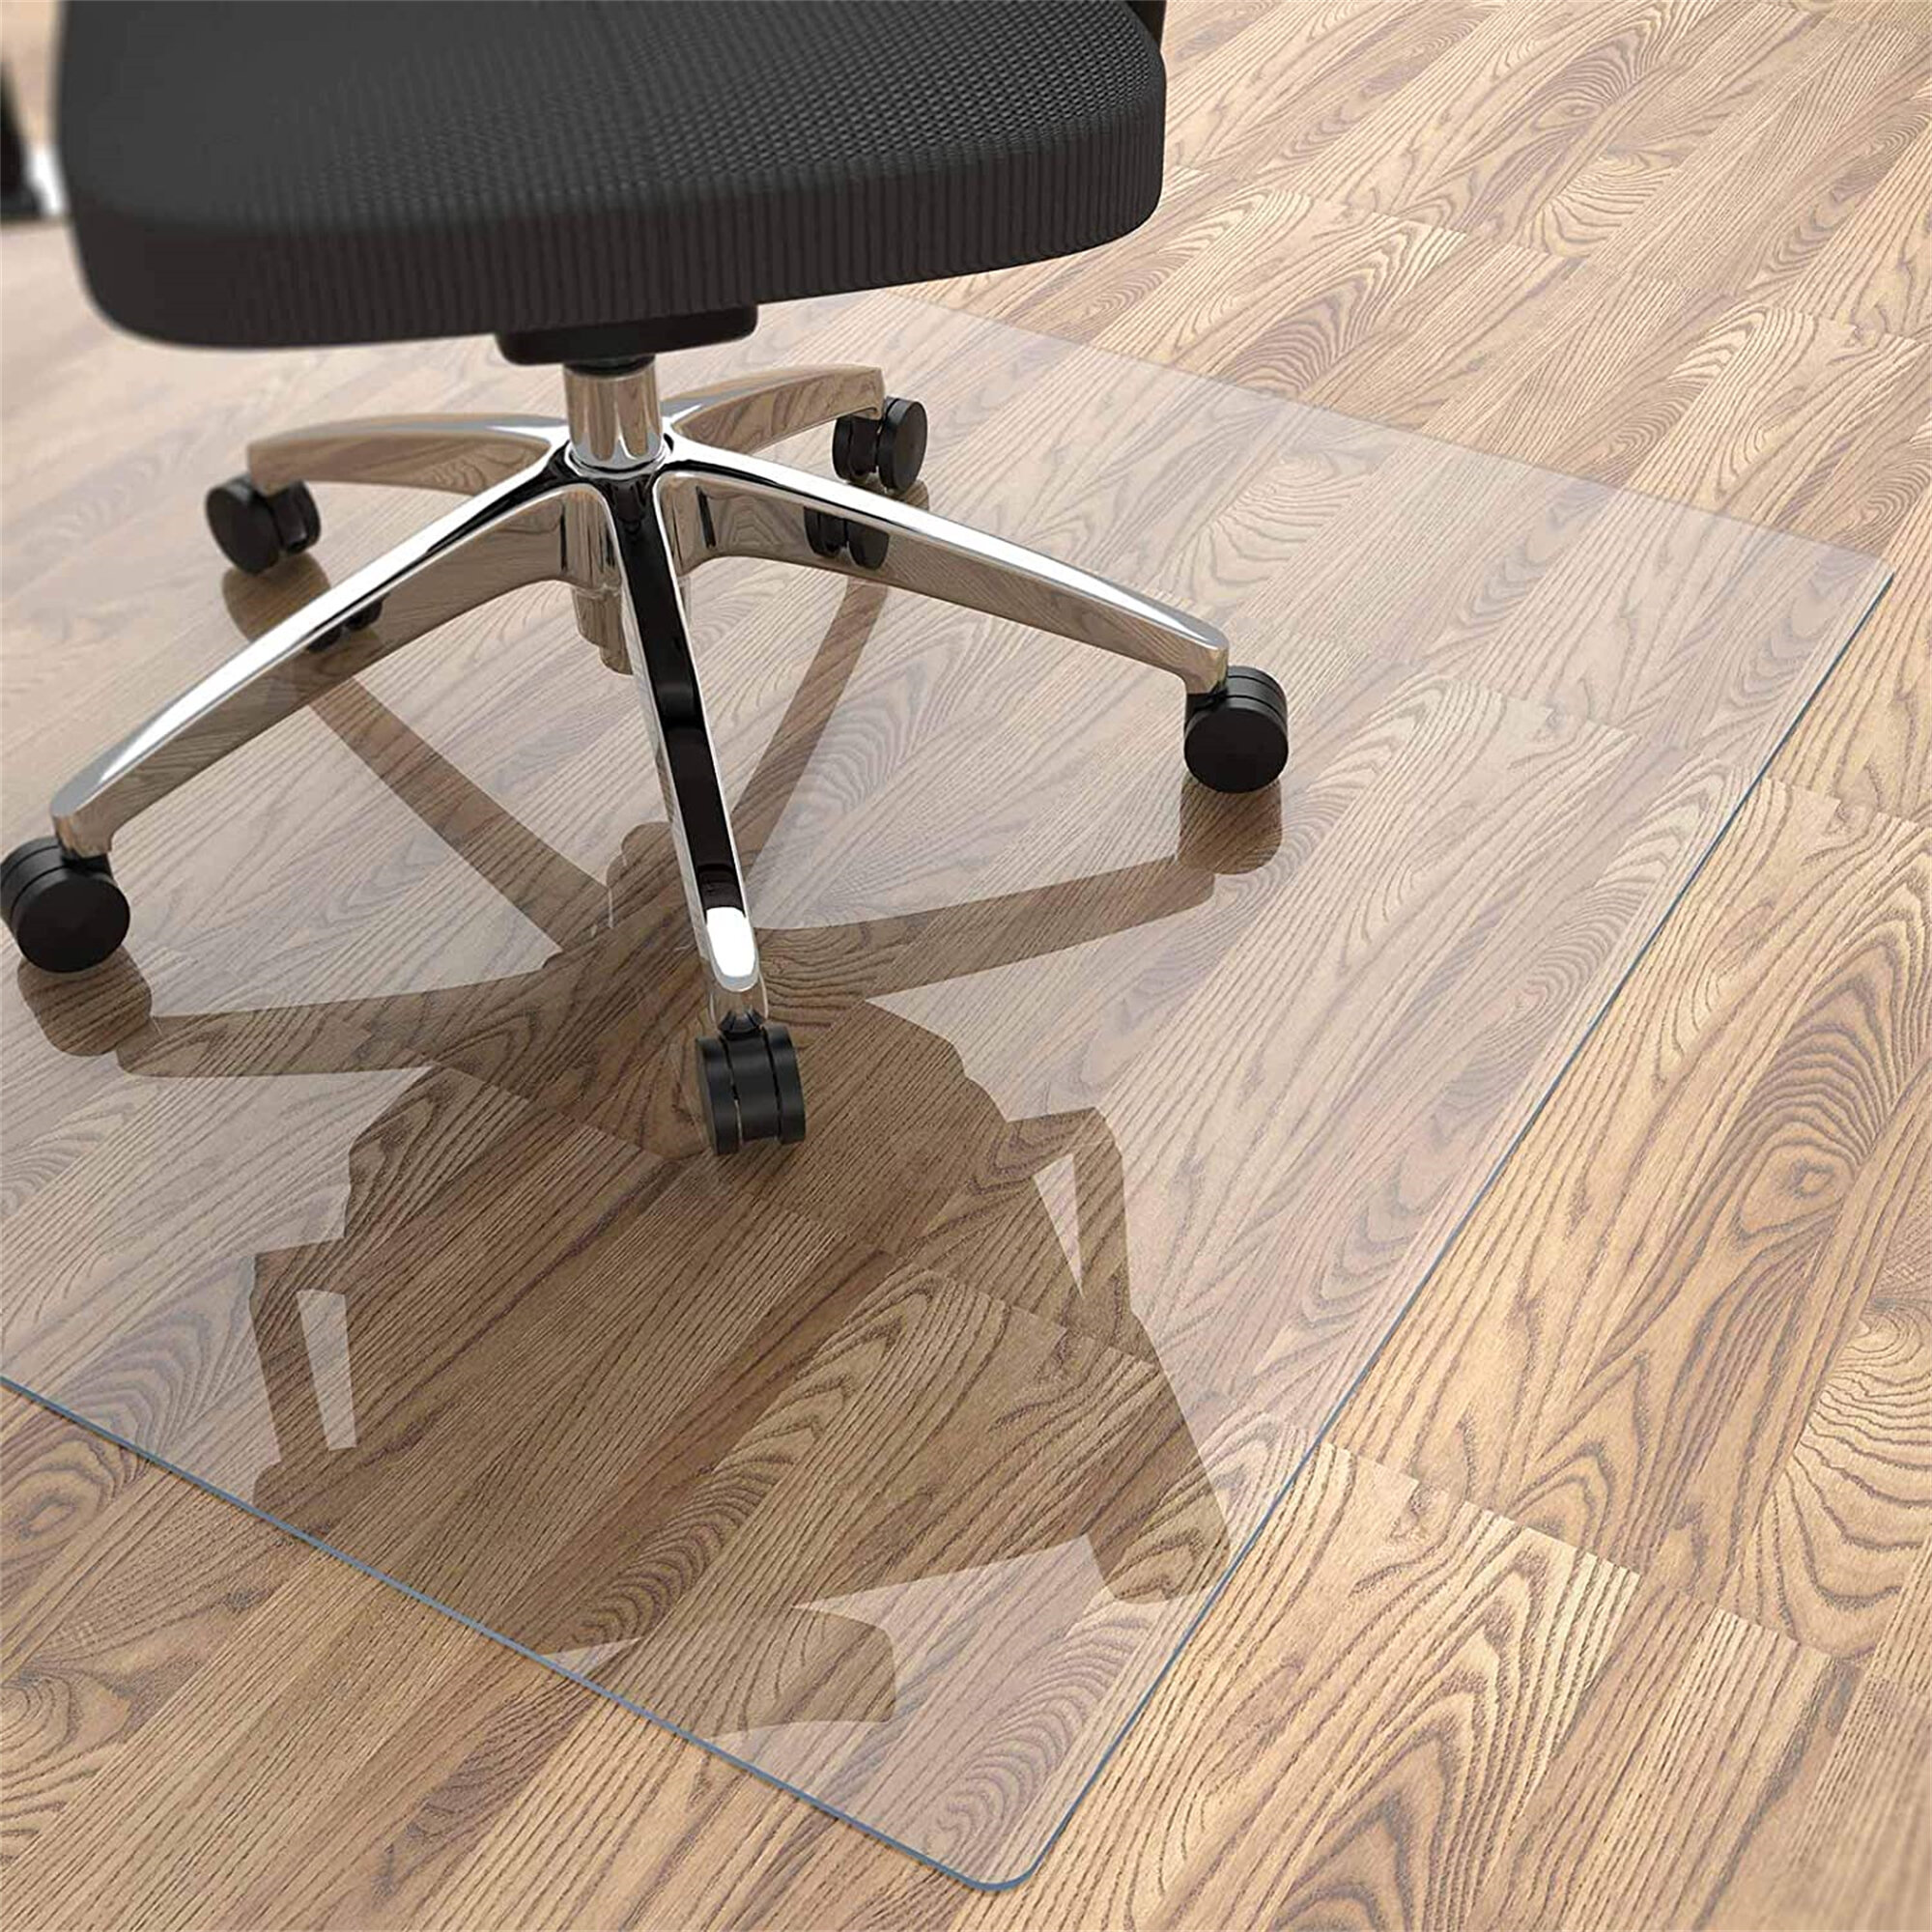 Floor Mat Office Carpet Non Slip Wear Resistant Rolling Chair Rectangle Transparent Moistureproof PVC Protector Anti Scratch Computer Desk Home